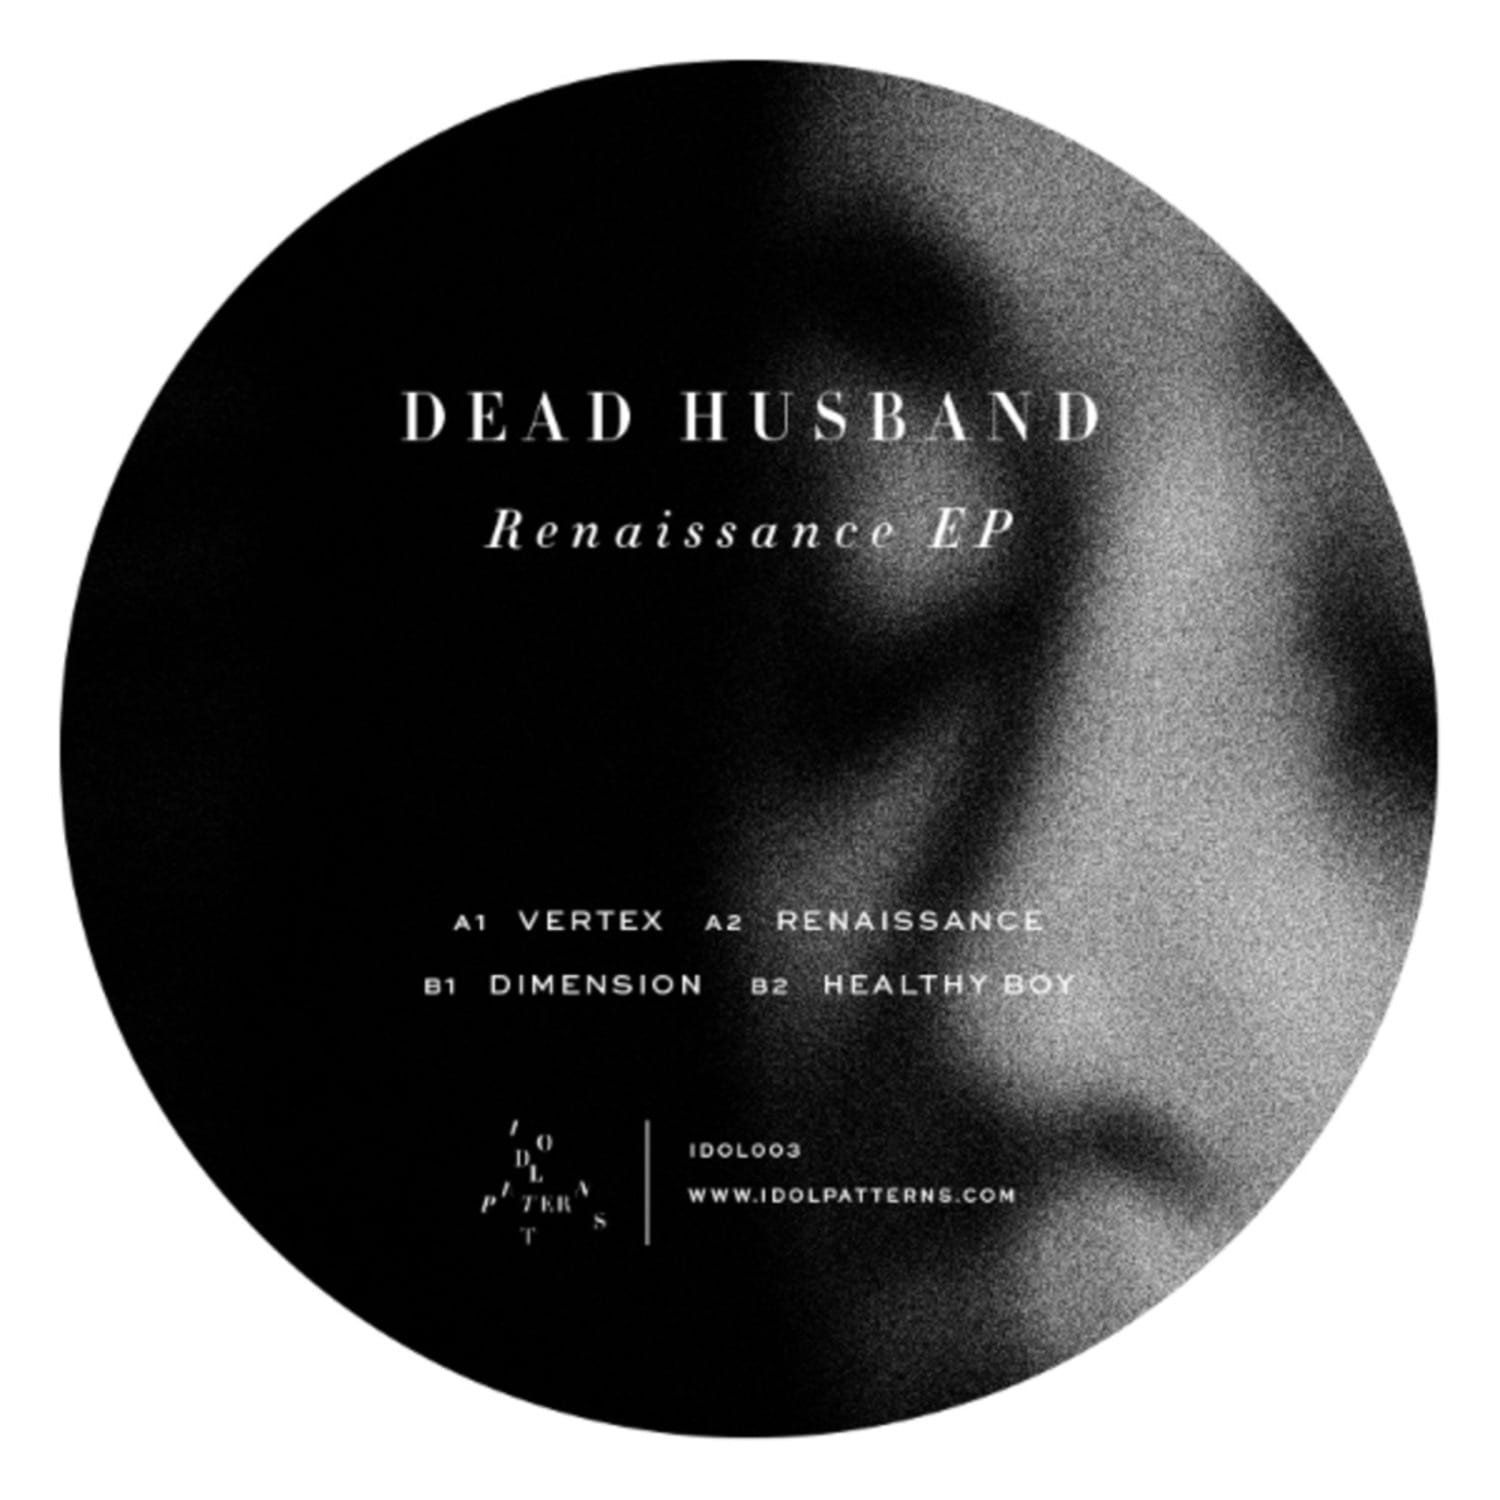 Dead Husband - RENAISSANCE EP